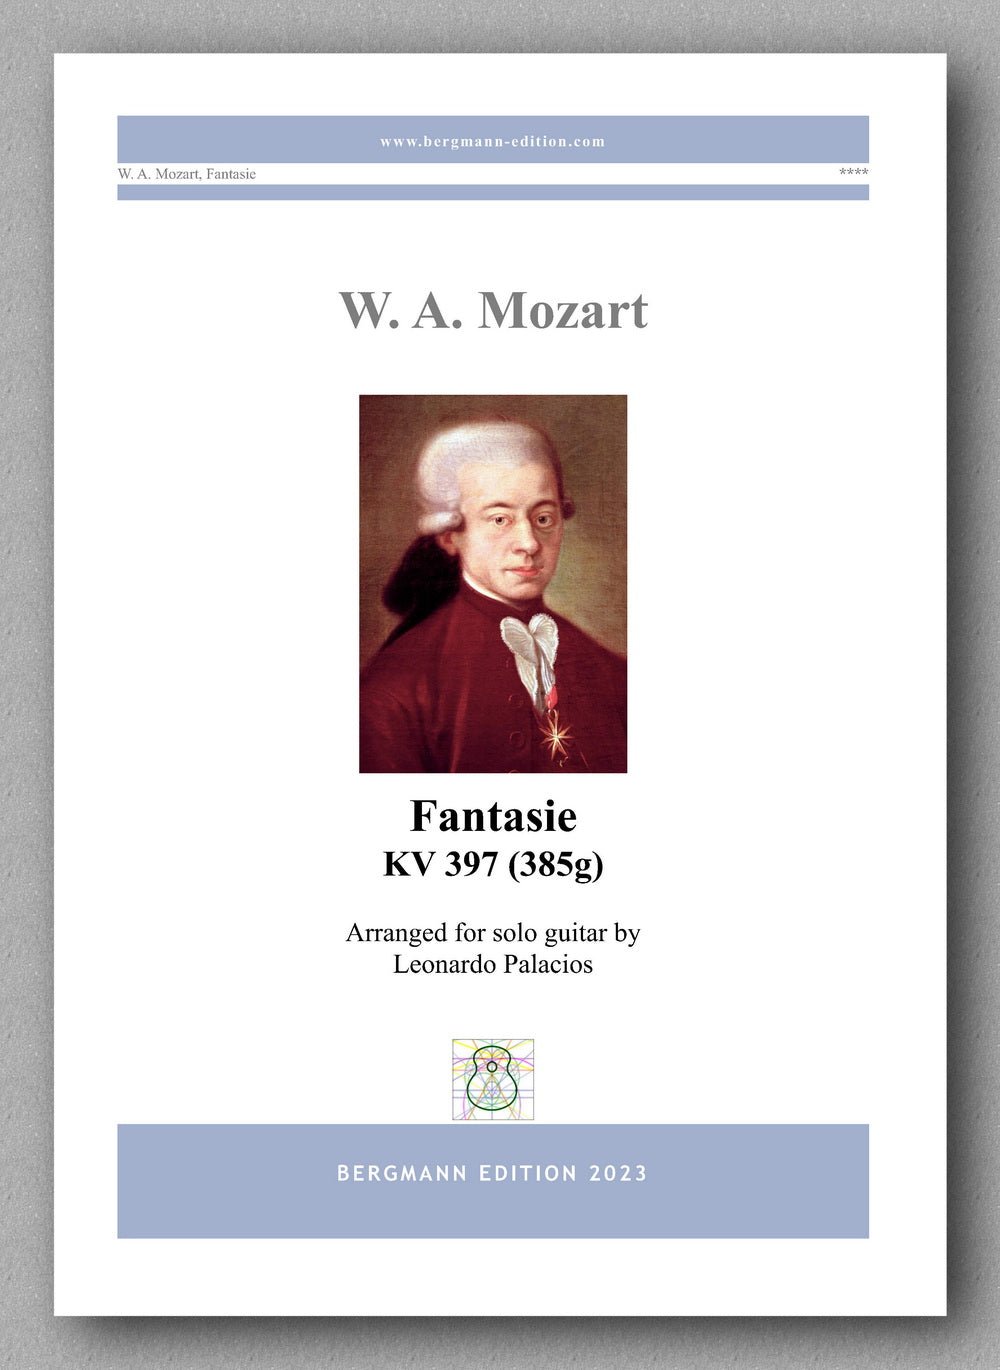 Mozart-Palacios, Fantasie, KV 397 - preview of the cover